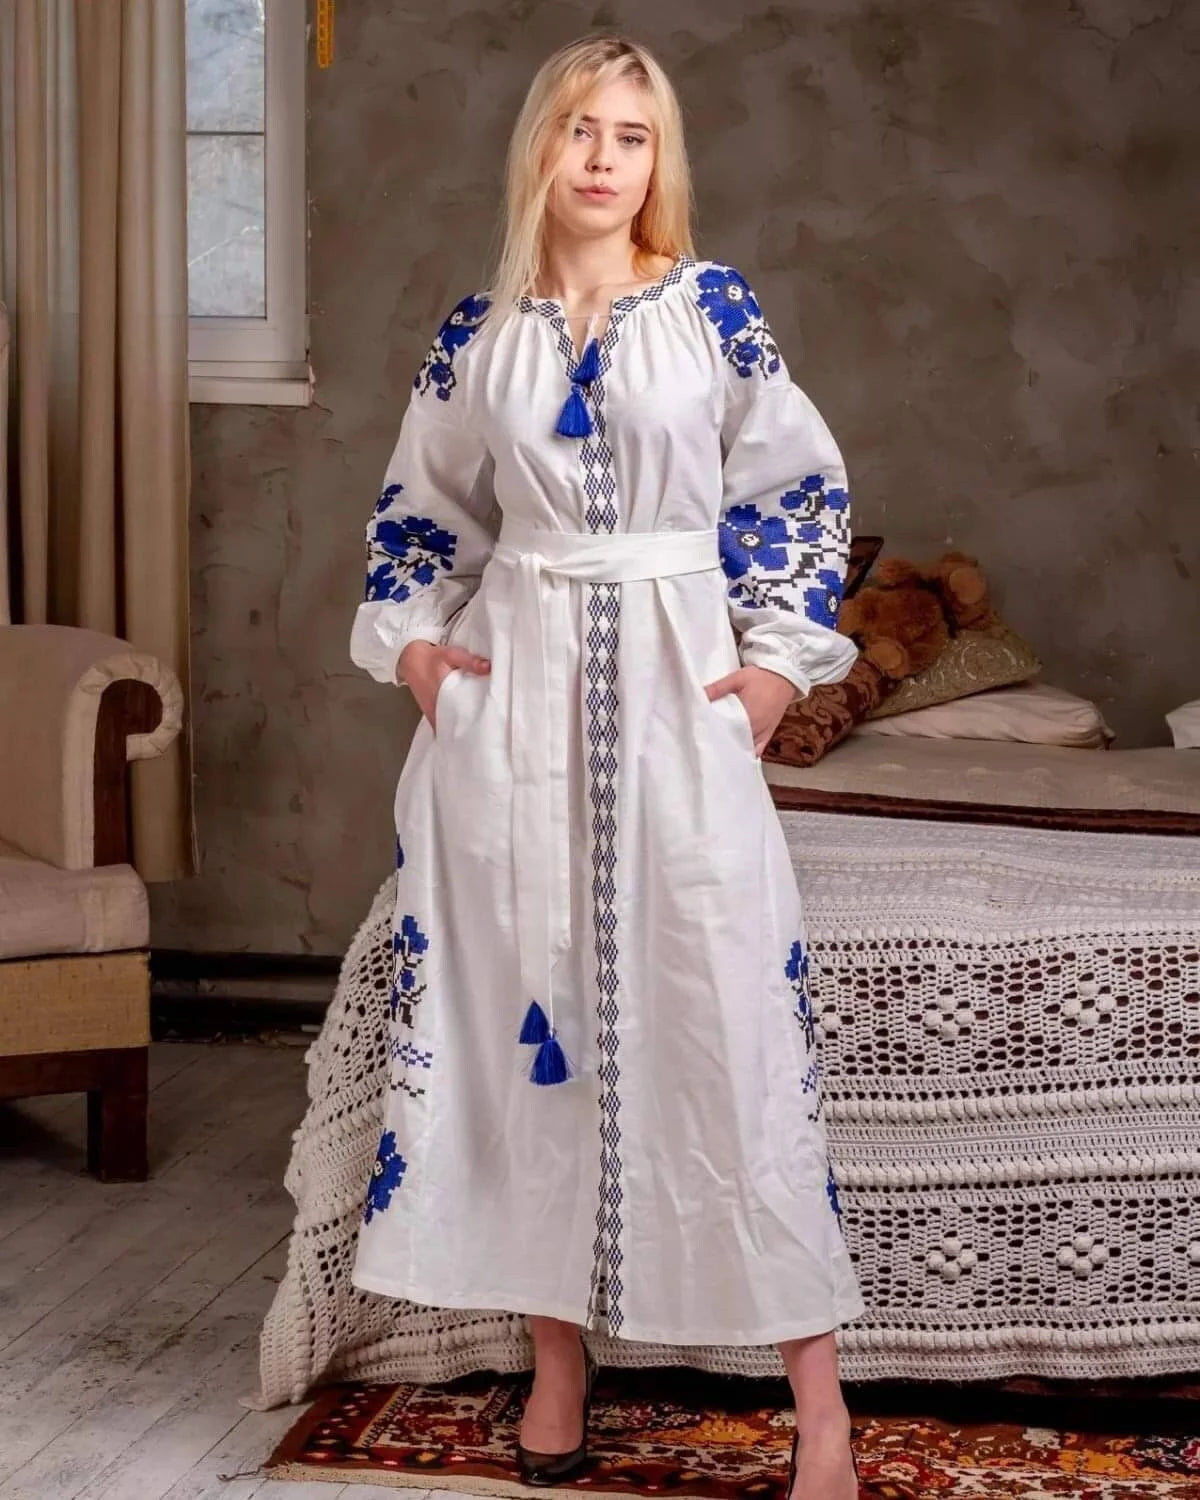 VYSHYVANKA DRESS "BYKET" BLUE/ EMBROIDERY UKRAINIAN DRESS IN USA